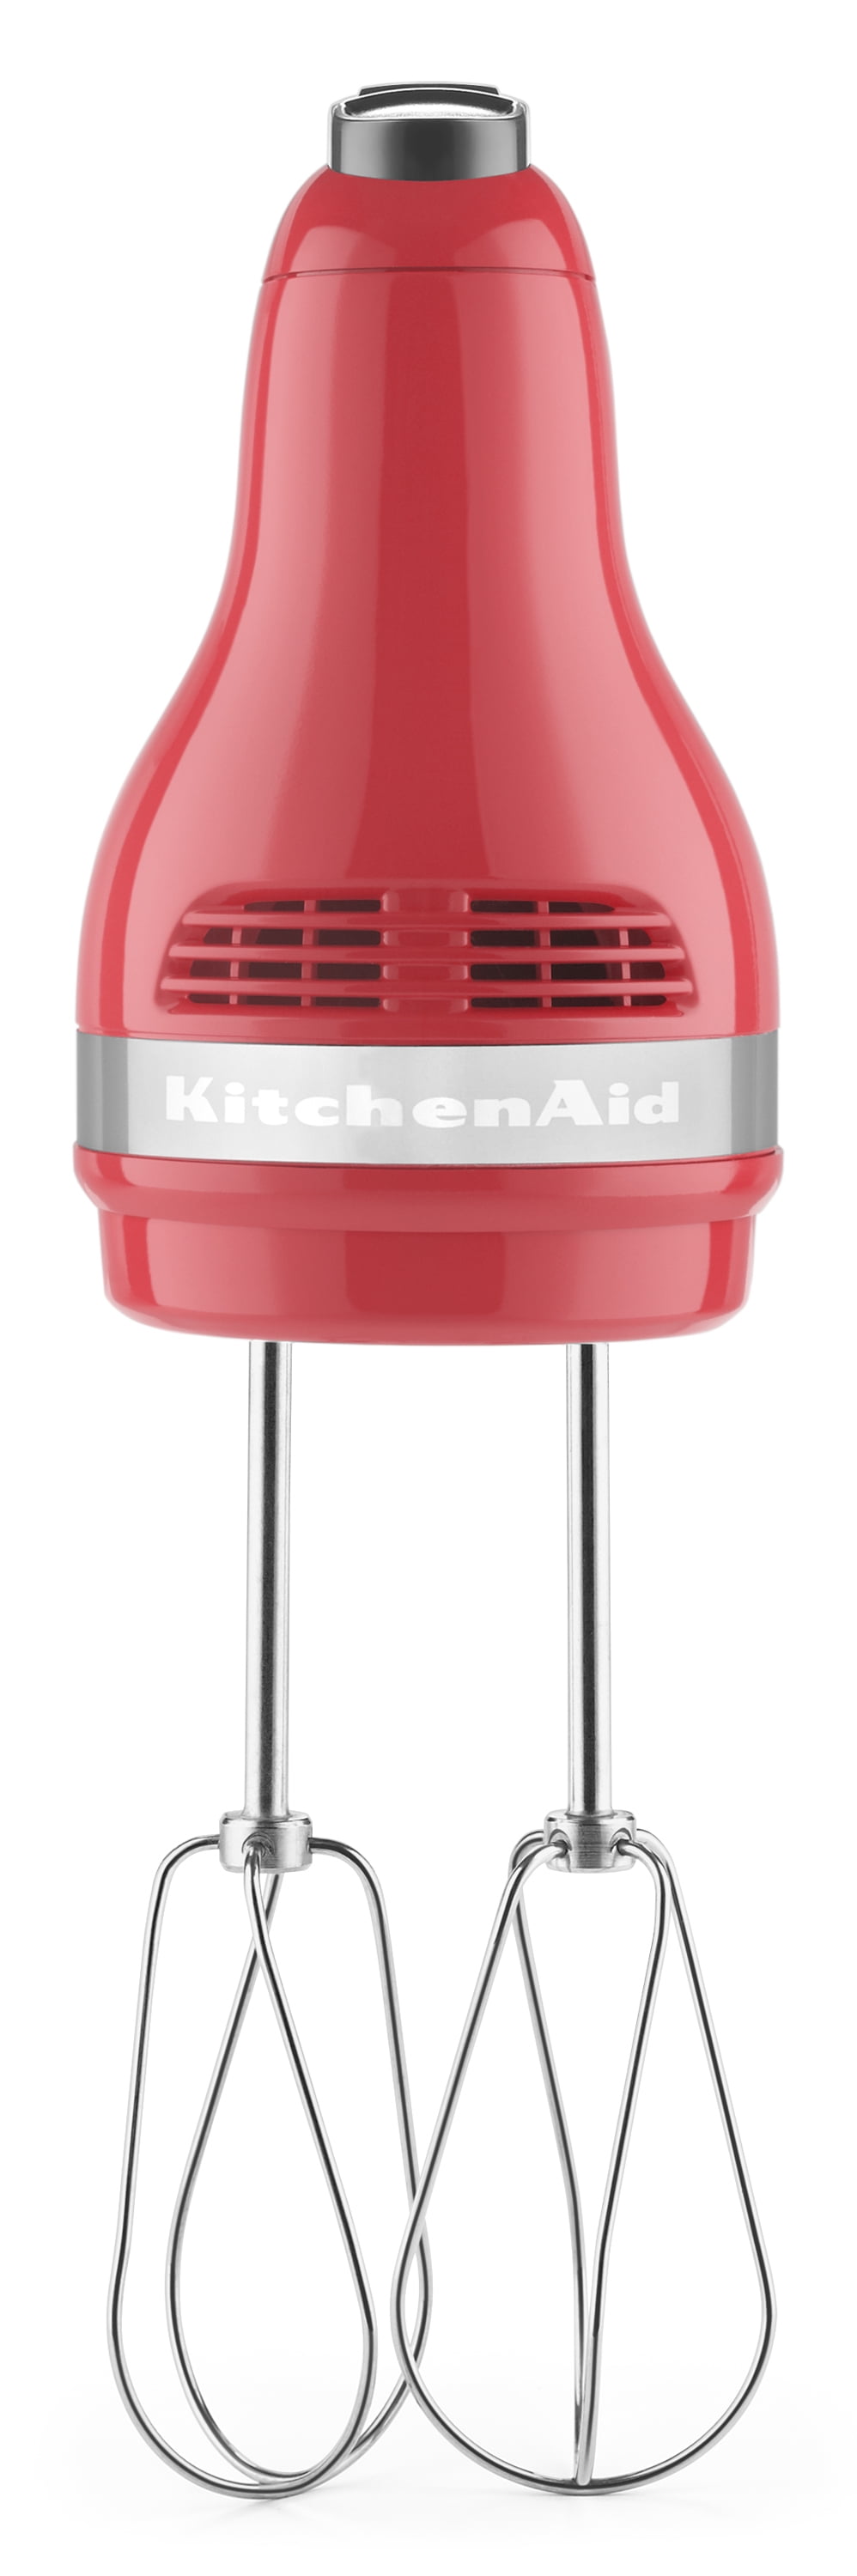 KitchenAid Hand Mixer 5 Speed ULTRA POWER White KHM512WH Baking